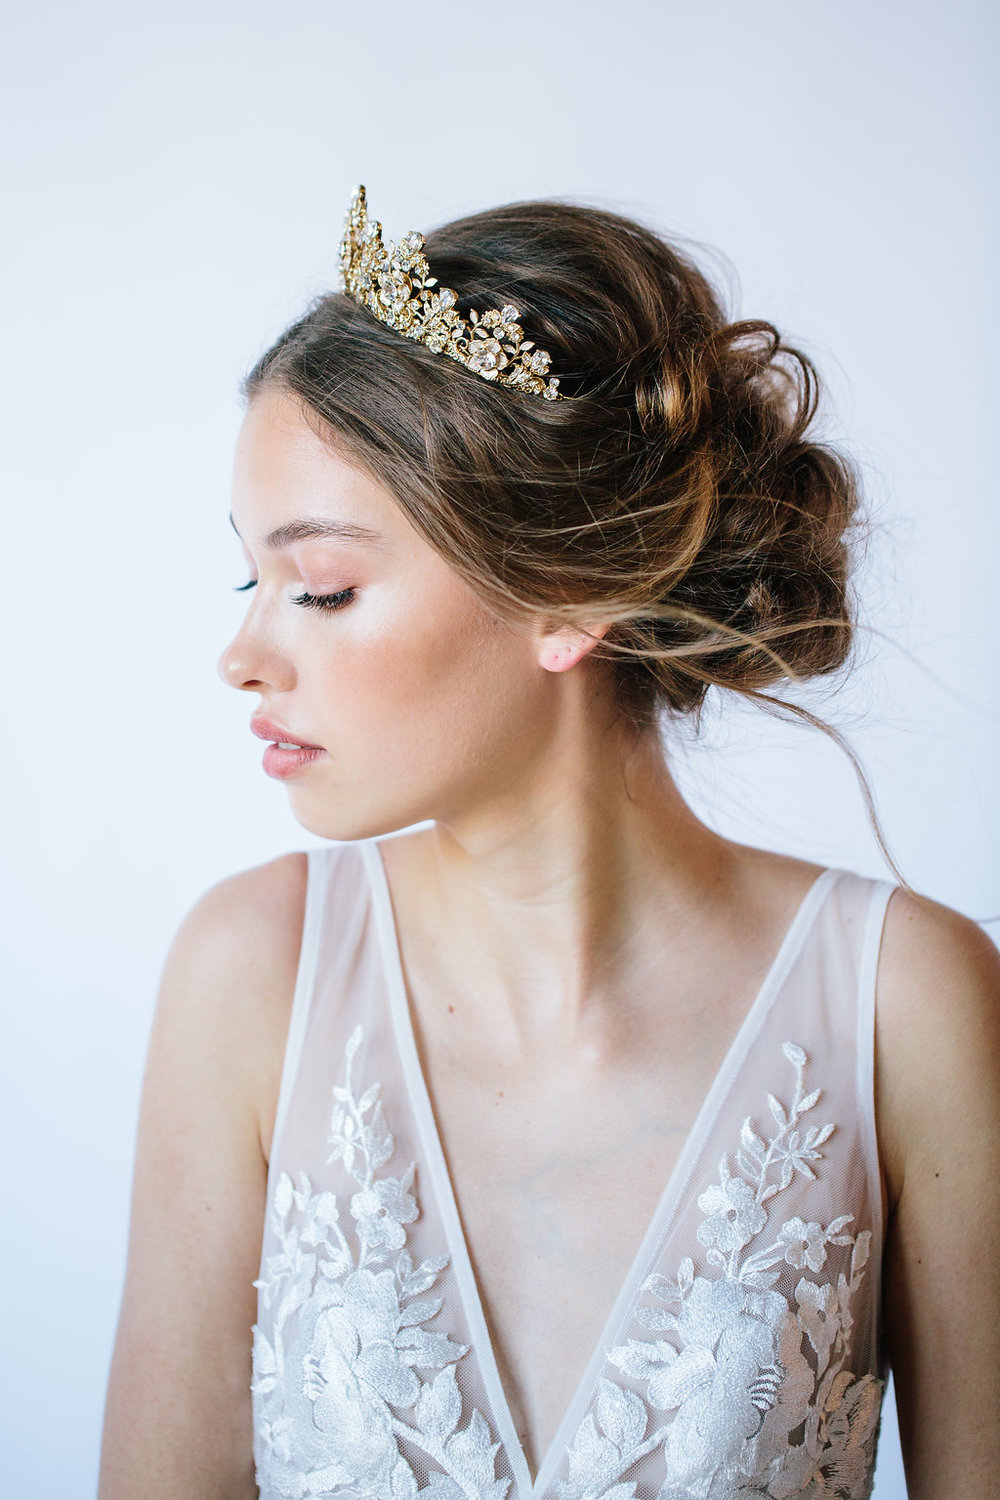 How to wear a wedding tiara